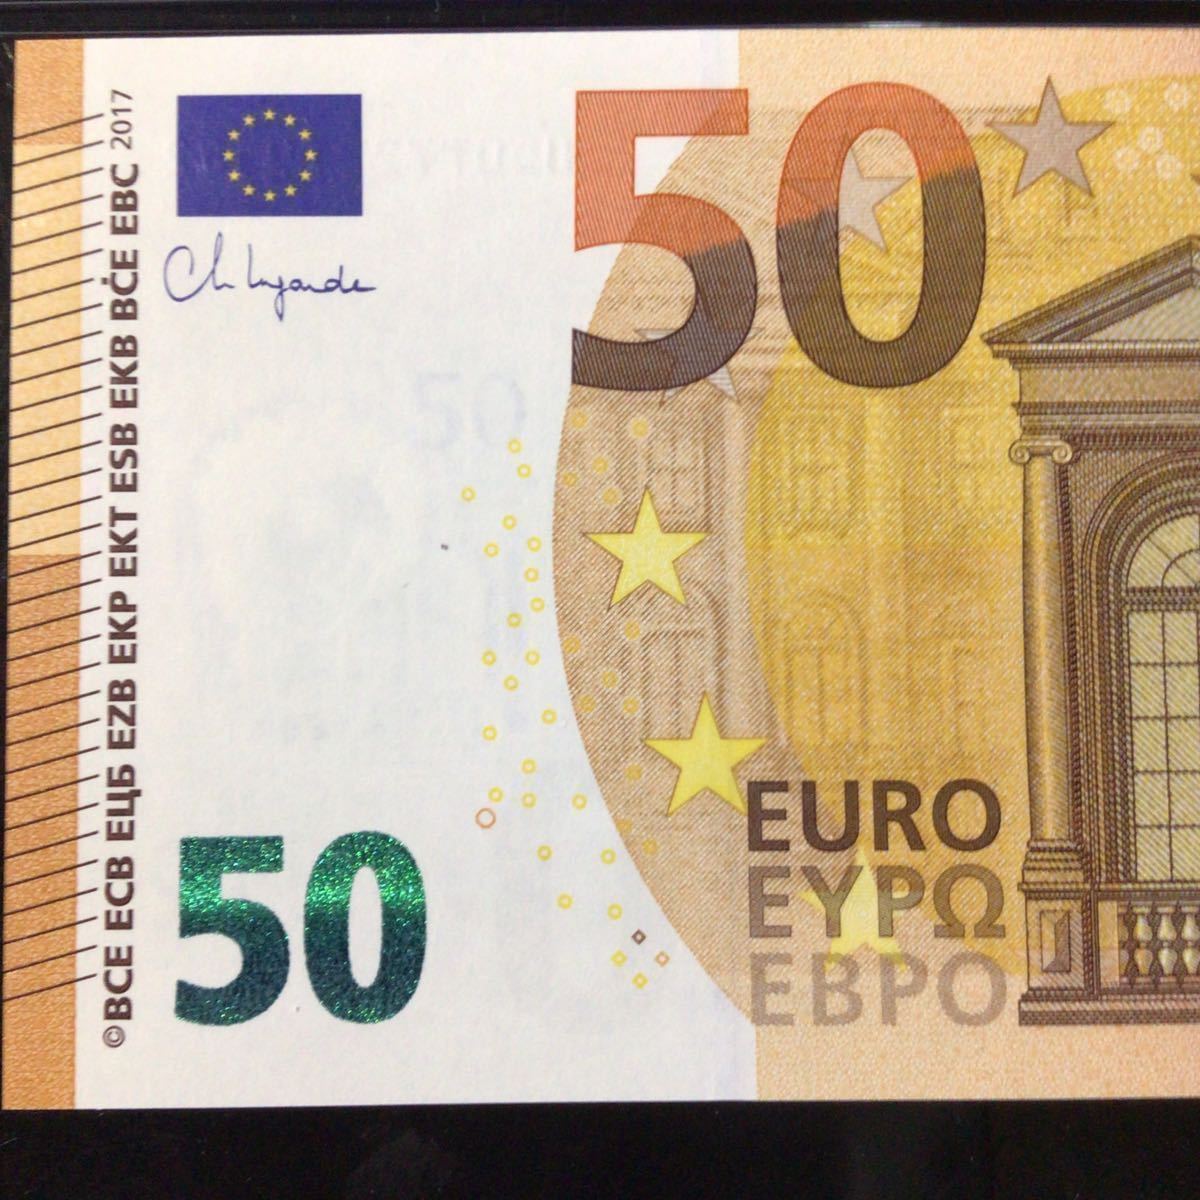 66 Gem Euro【2017】『PMG World Banknote UNION《France》50 EUROPEAN Grading  Uncirculated EPQ』 Grading - mussgo.com.co